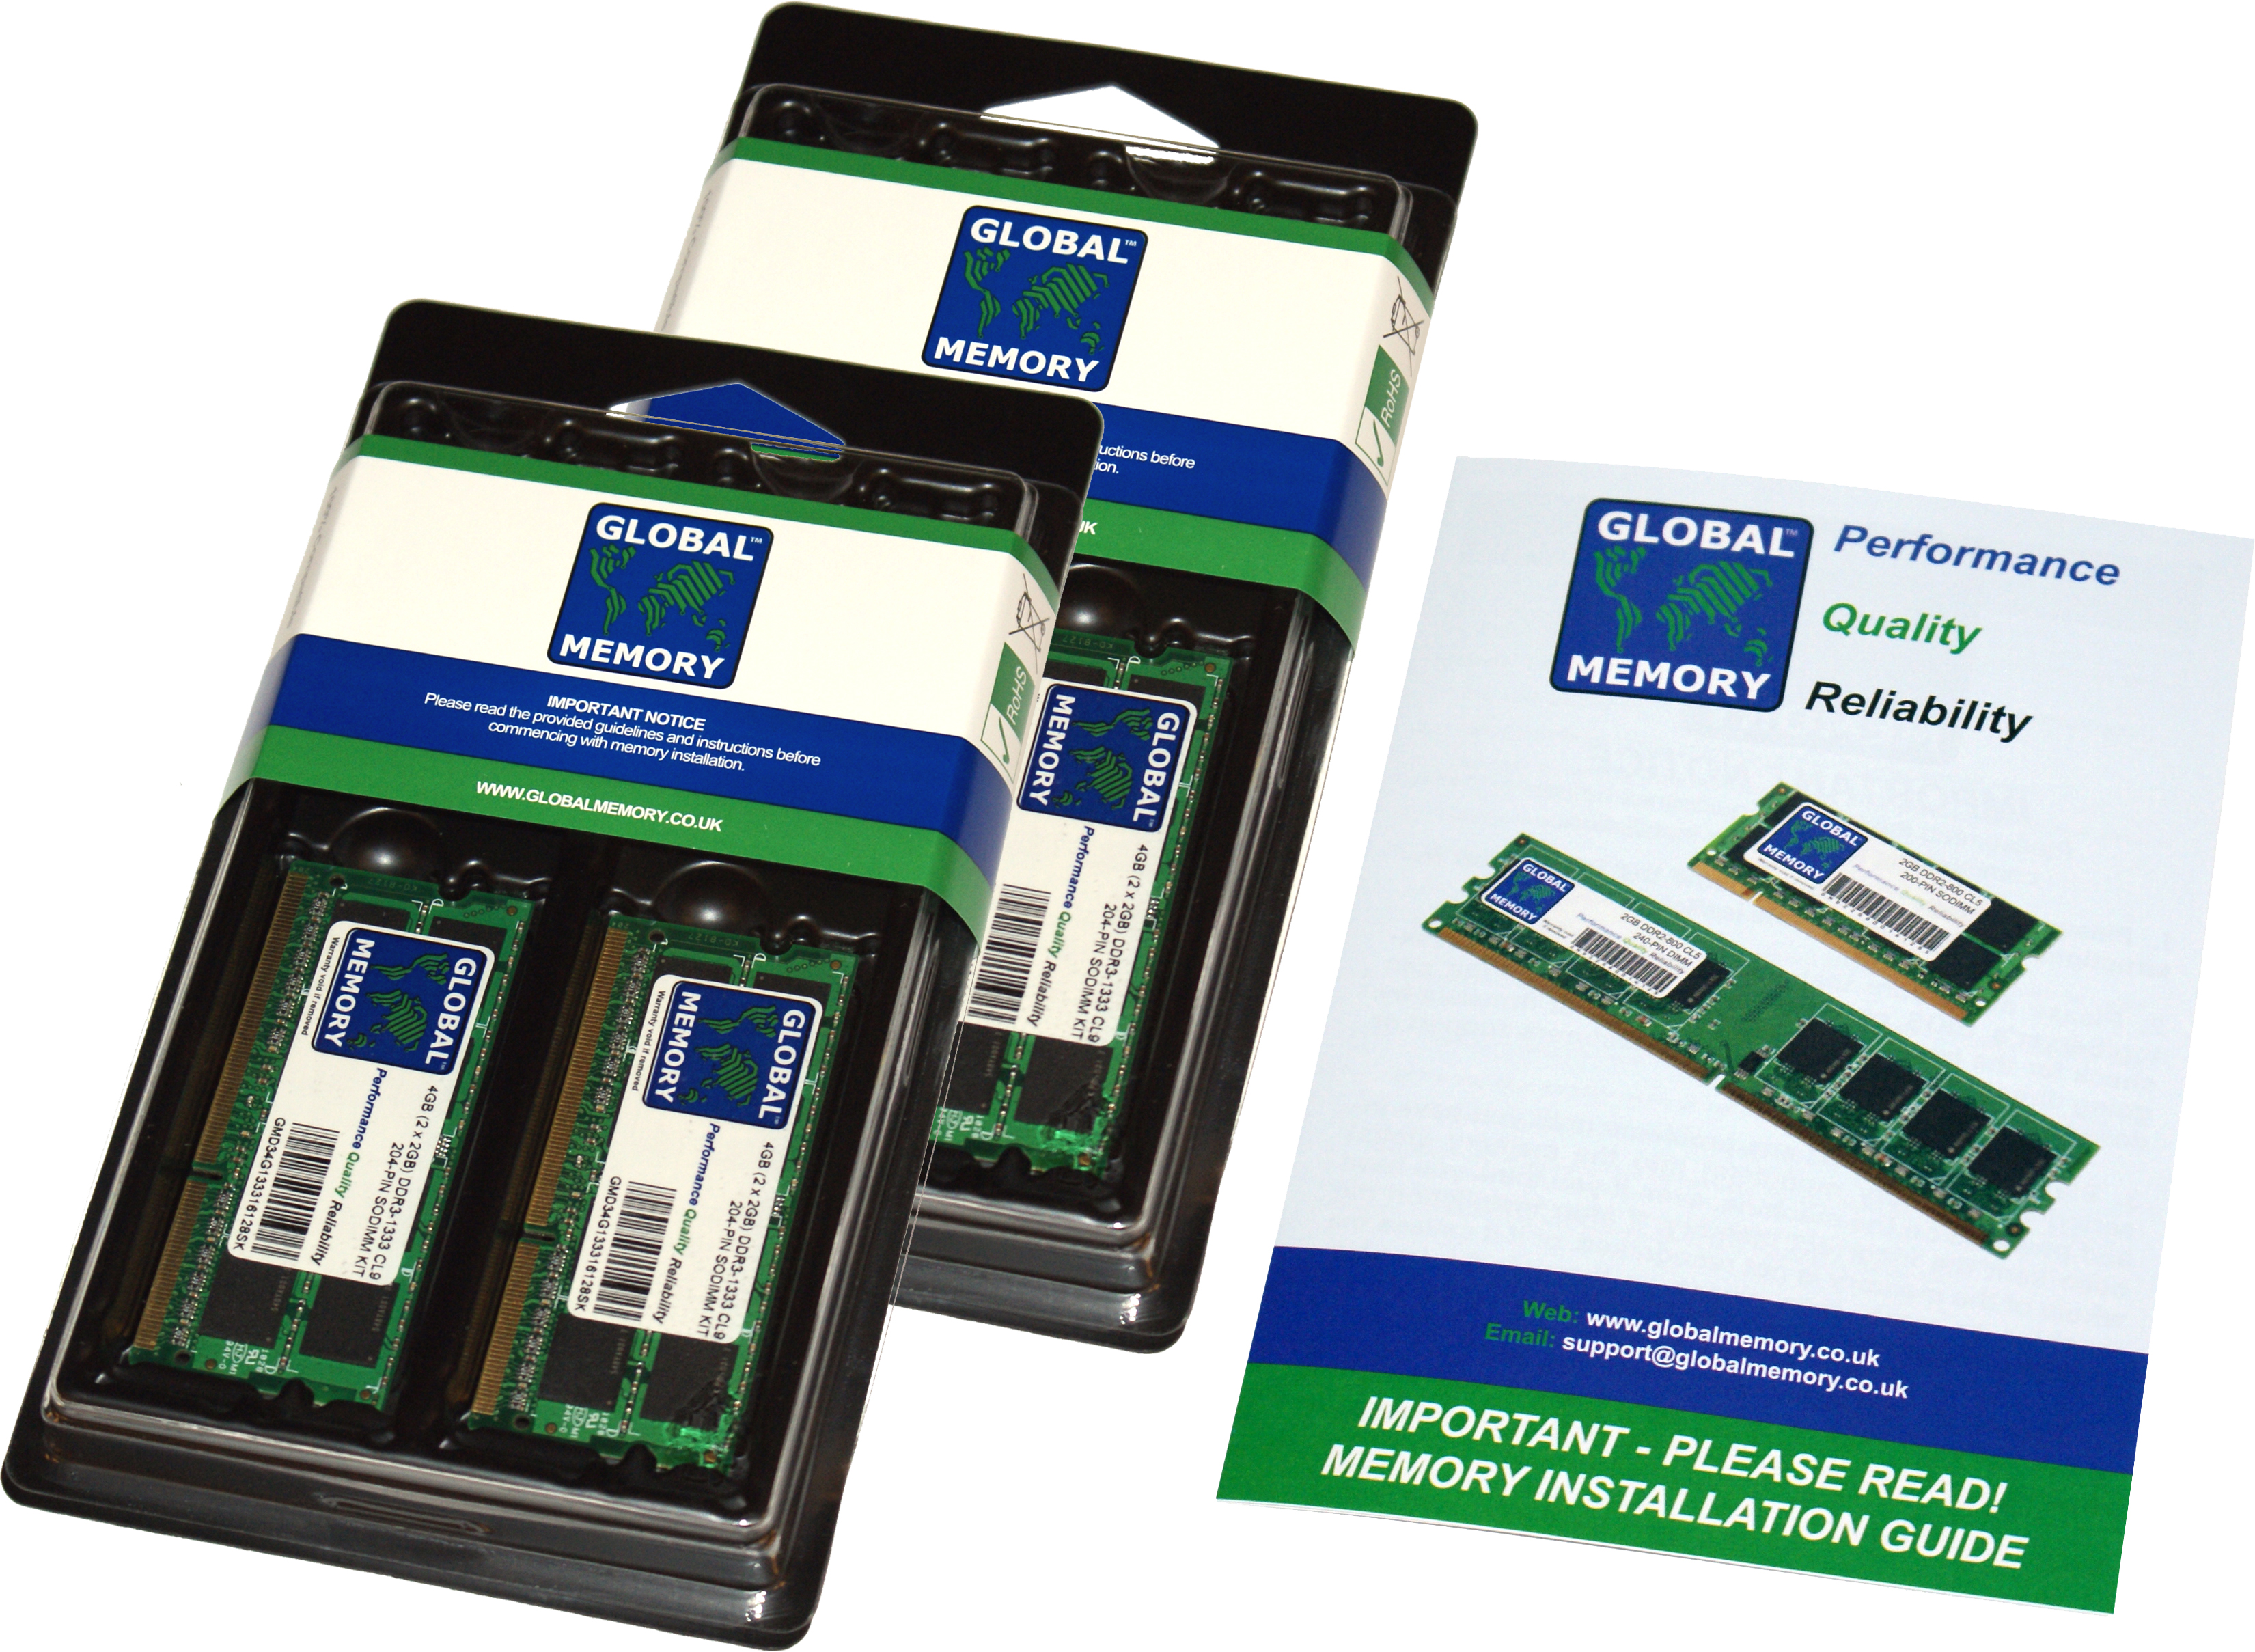 128GB (4 x 32GB) DDR4 2400MHz PC4-19200 260-PIN SODIMM MEMORY RAM KIT FOR LAPTOPS/NOTEBOOKS